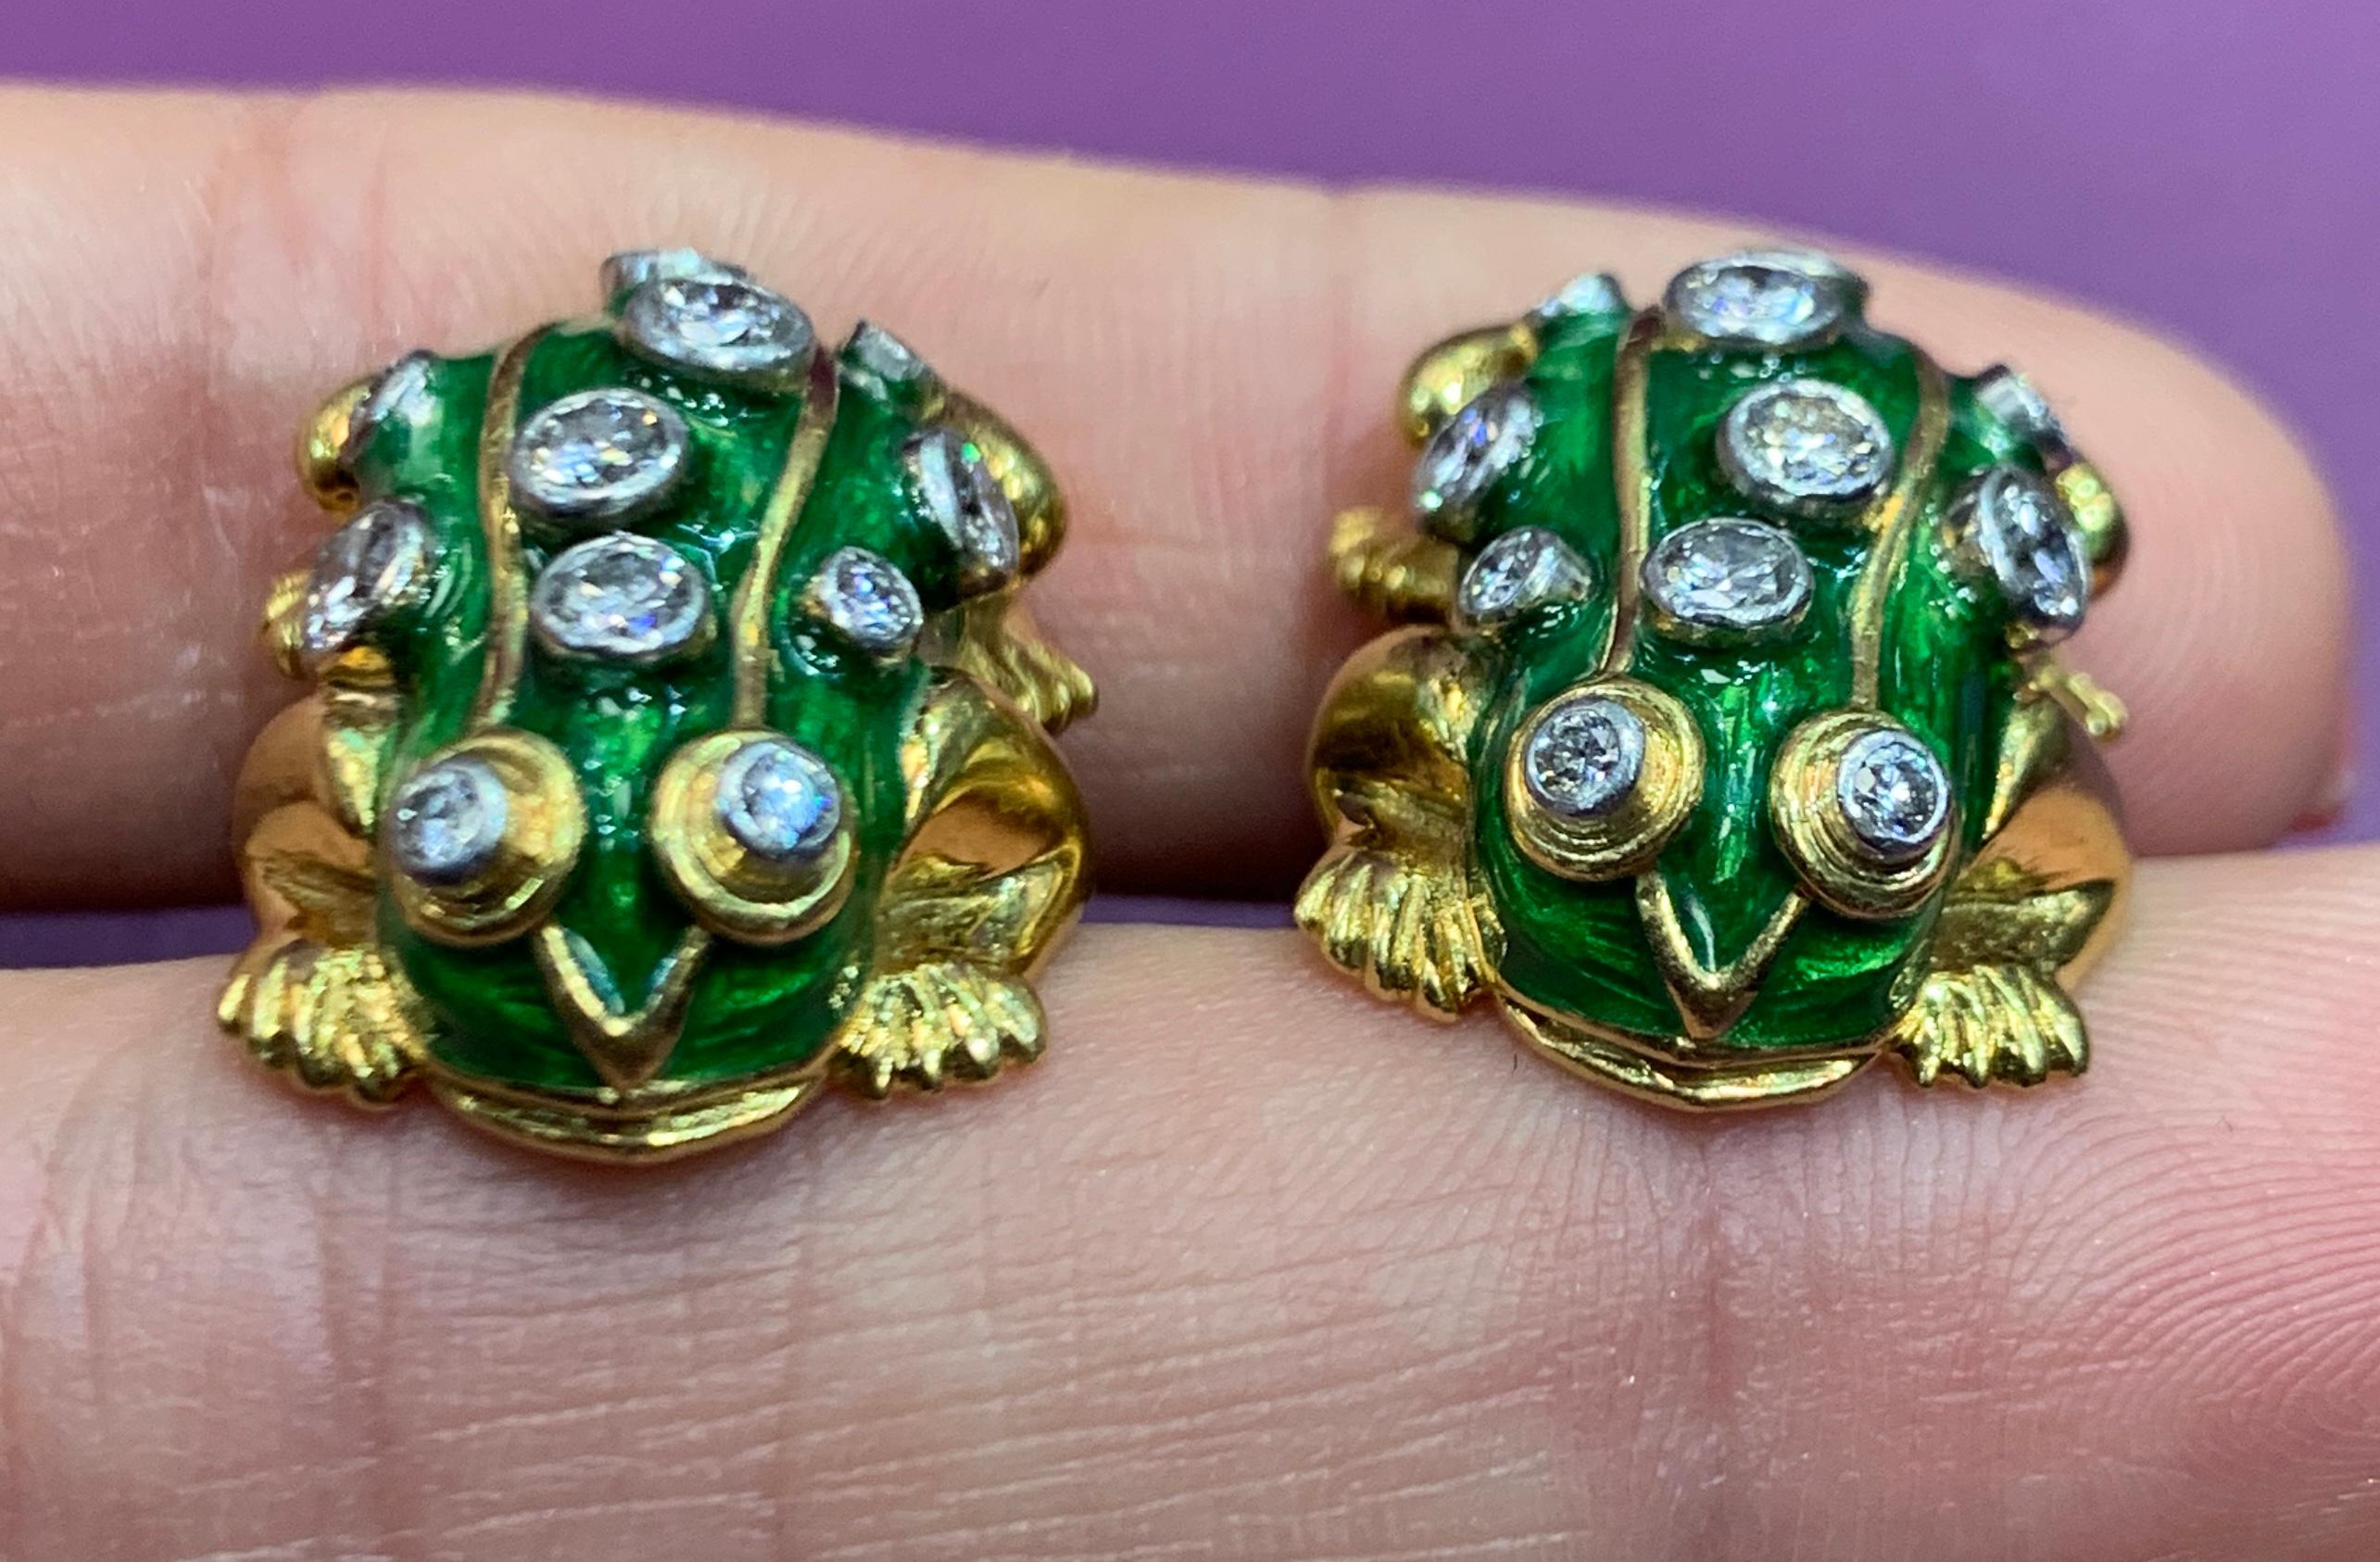 Green Enamel & Diamond Frog Cufflinks 18K Yellow Gold
22 round cut diamonds
Measurements: 1